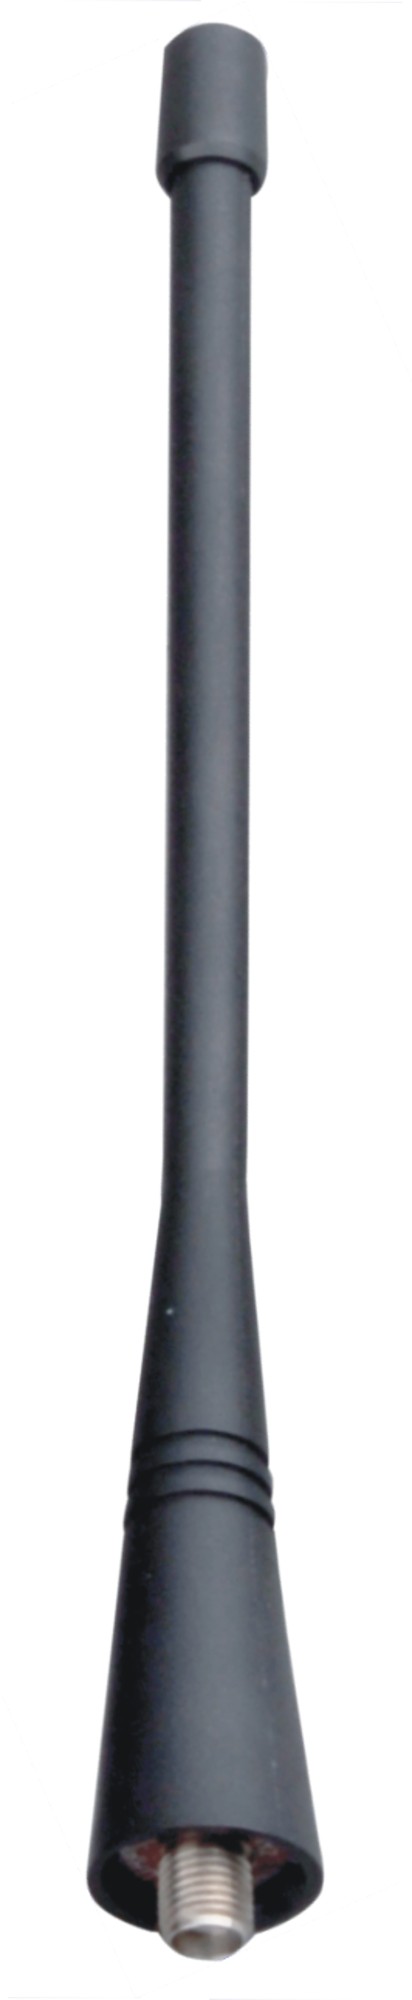 HYTERA UHF Antenne 15.7 cm, SMA-Buchse, 420-470 MHz AN0445W04 580003017008